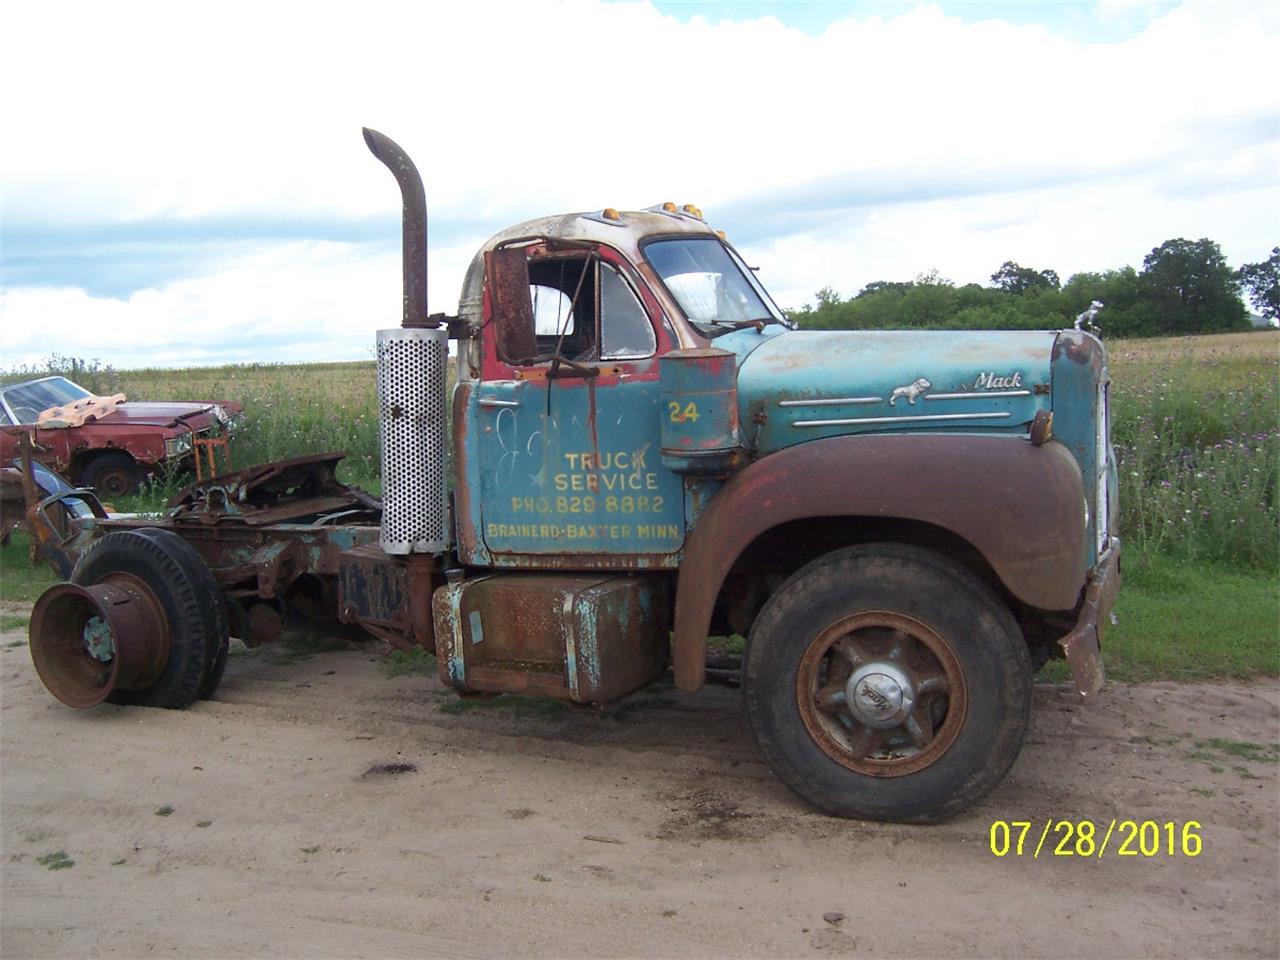 For Sale: 1957 Mack B61 Truck in Parkers Prairie, Minnesota.